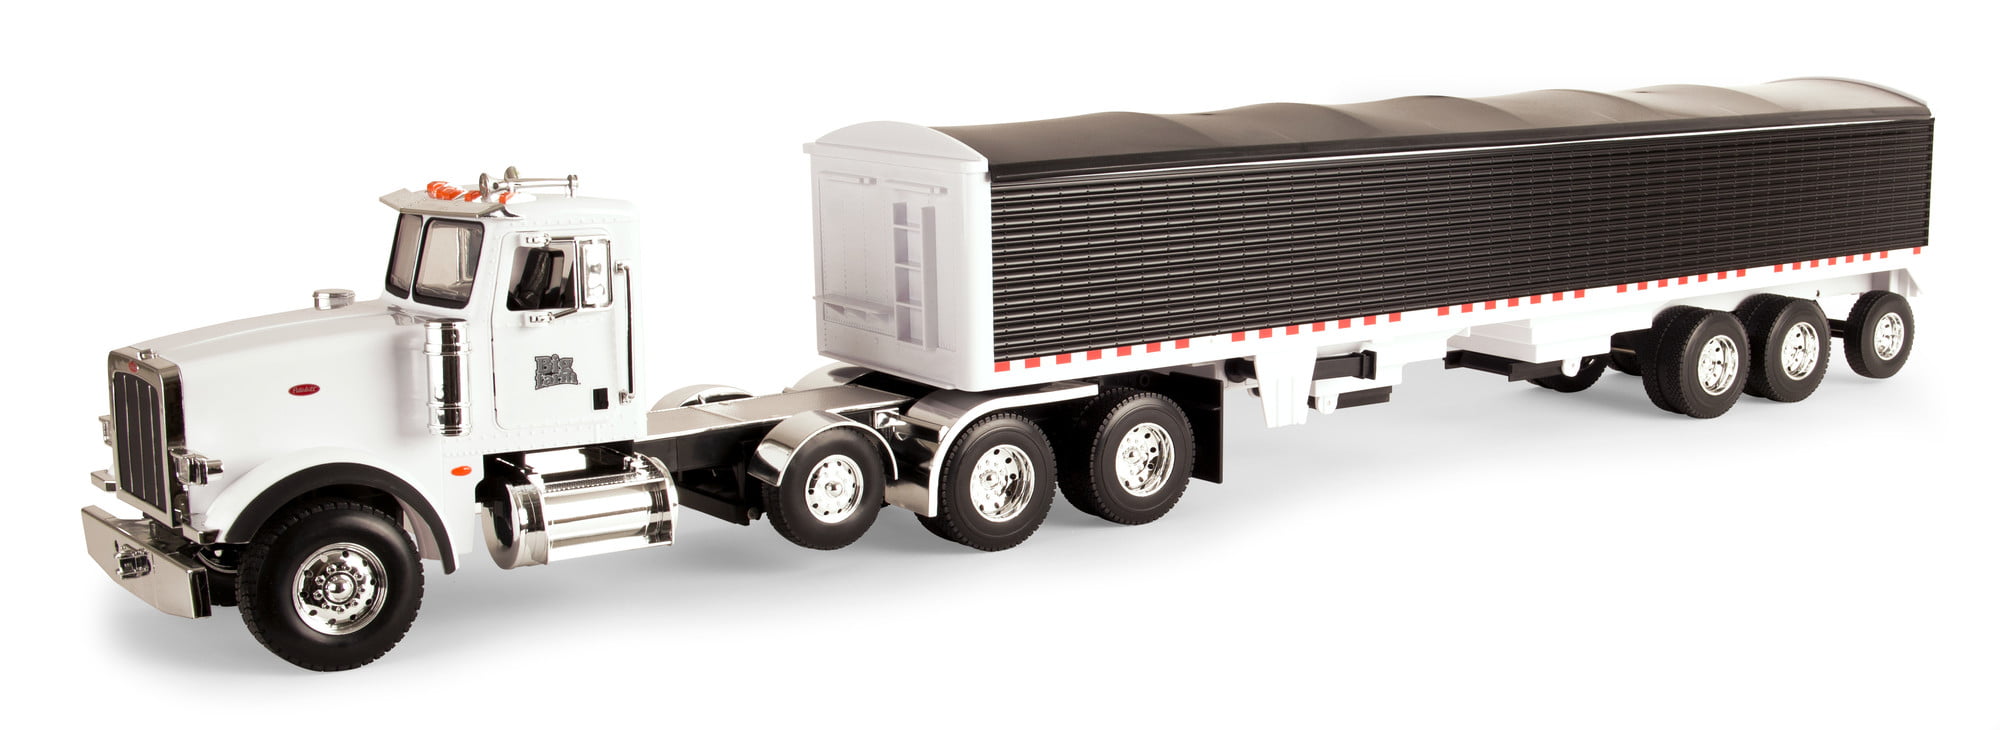 Peterbilt Big Farm Toy Truck Semi Truck With Grain Trailer 1 16 Scale